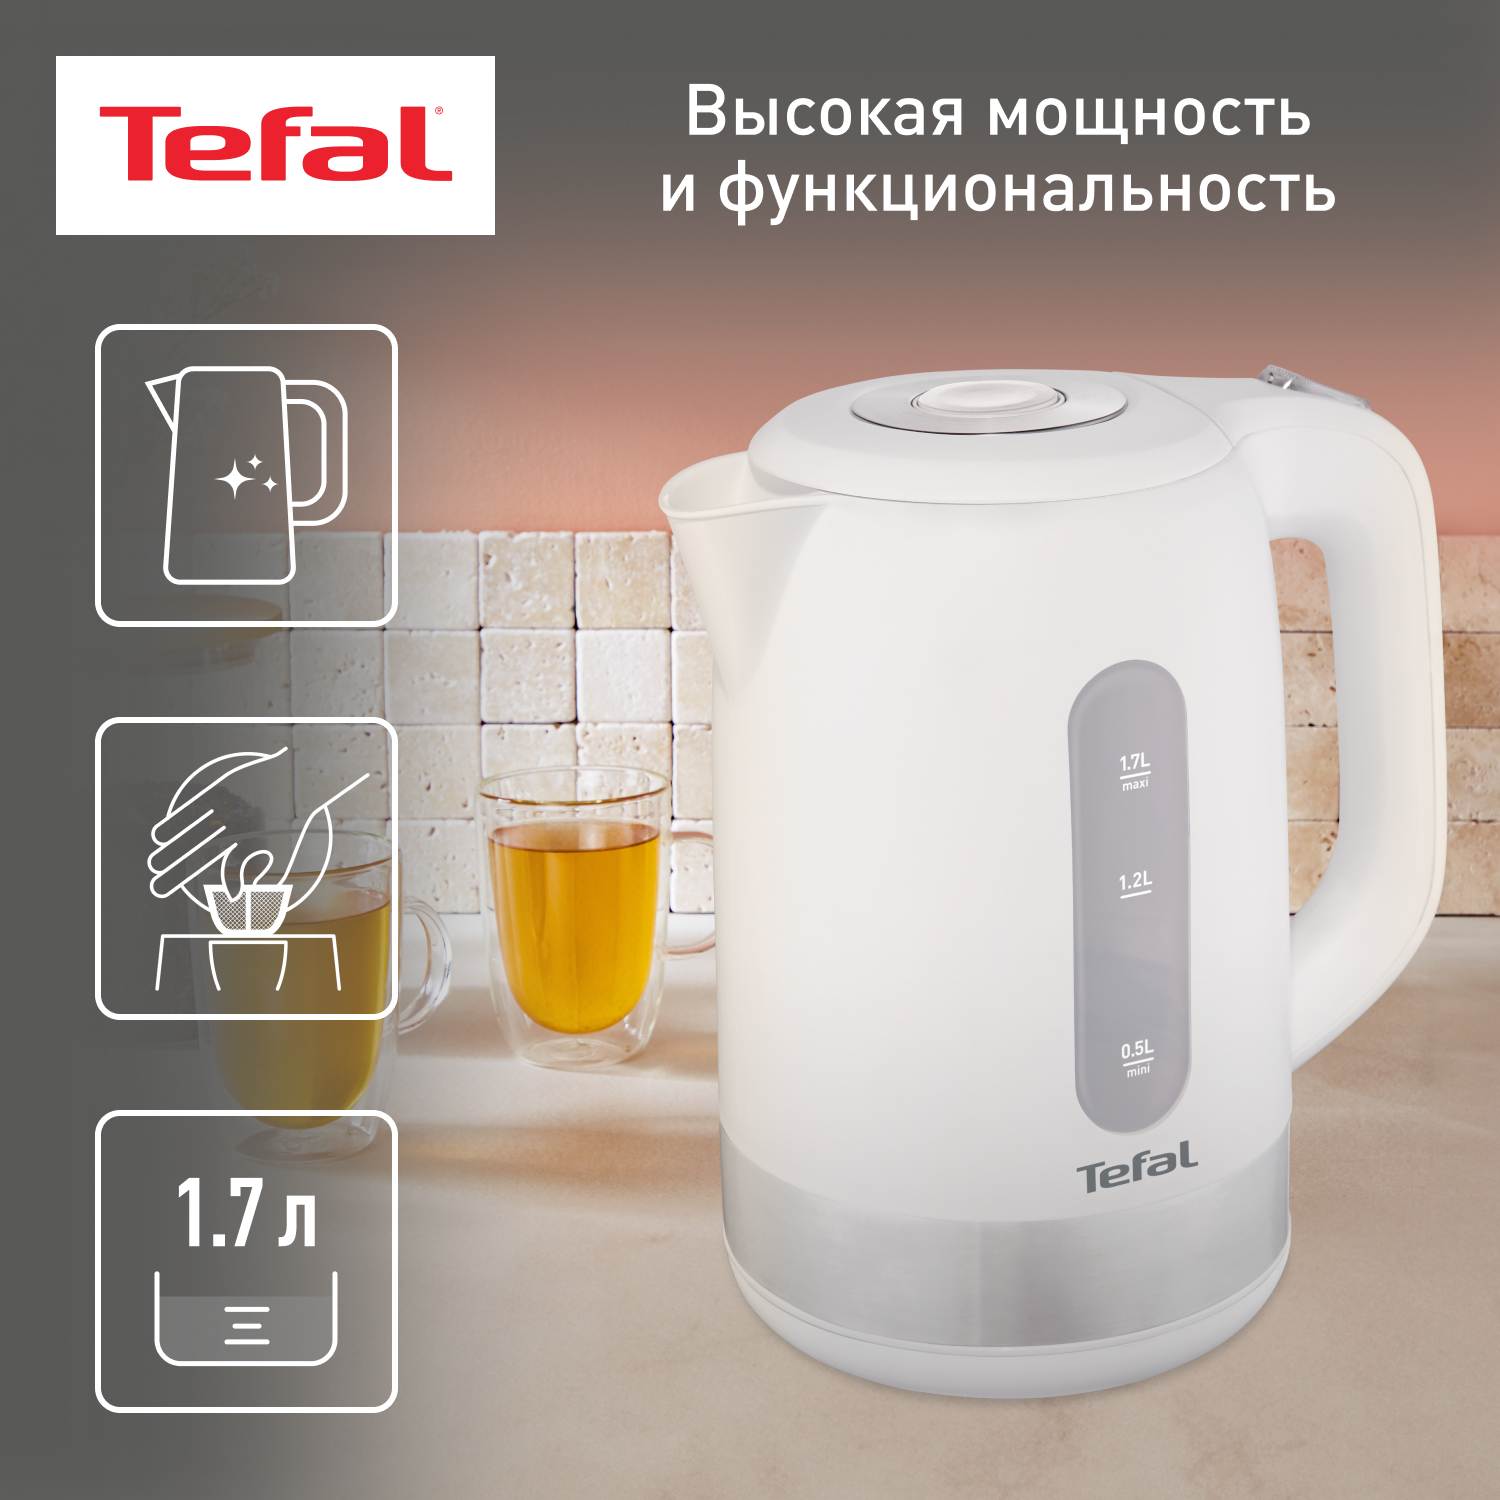 Чайник электрический Tefal KO330130 1.7 л белый, серебристый чайник электрический tefal ko330130 1 7 л white silver